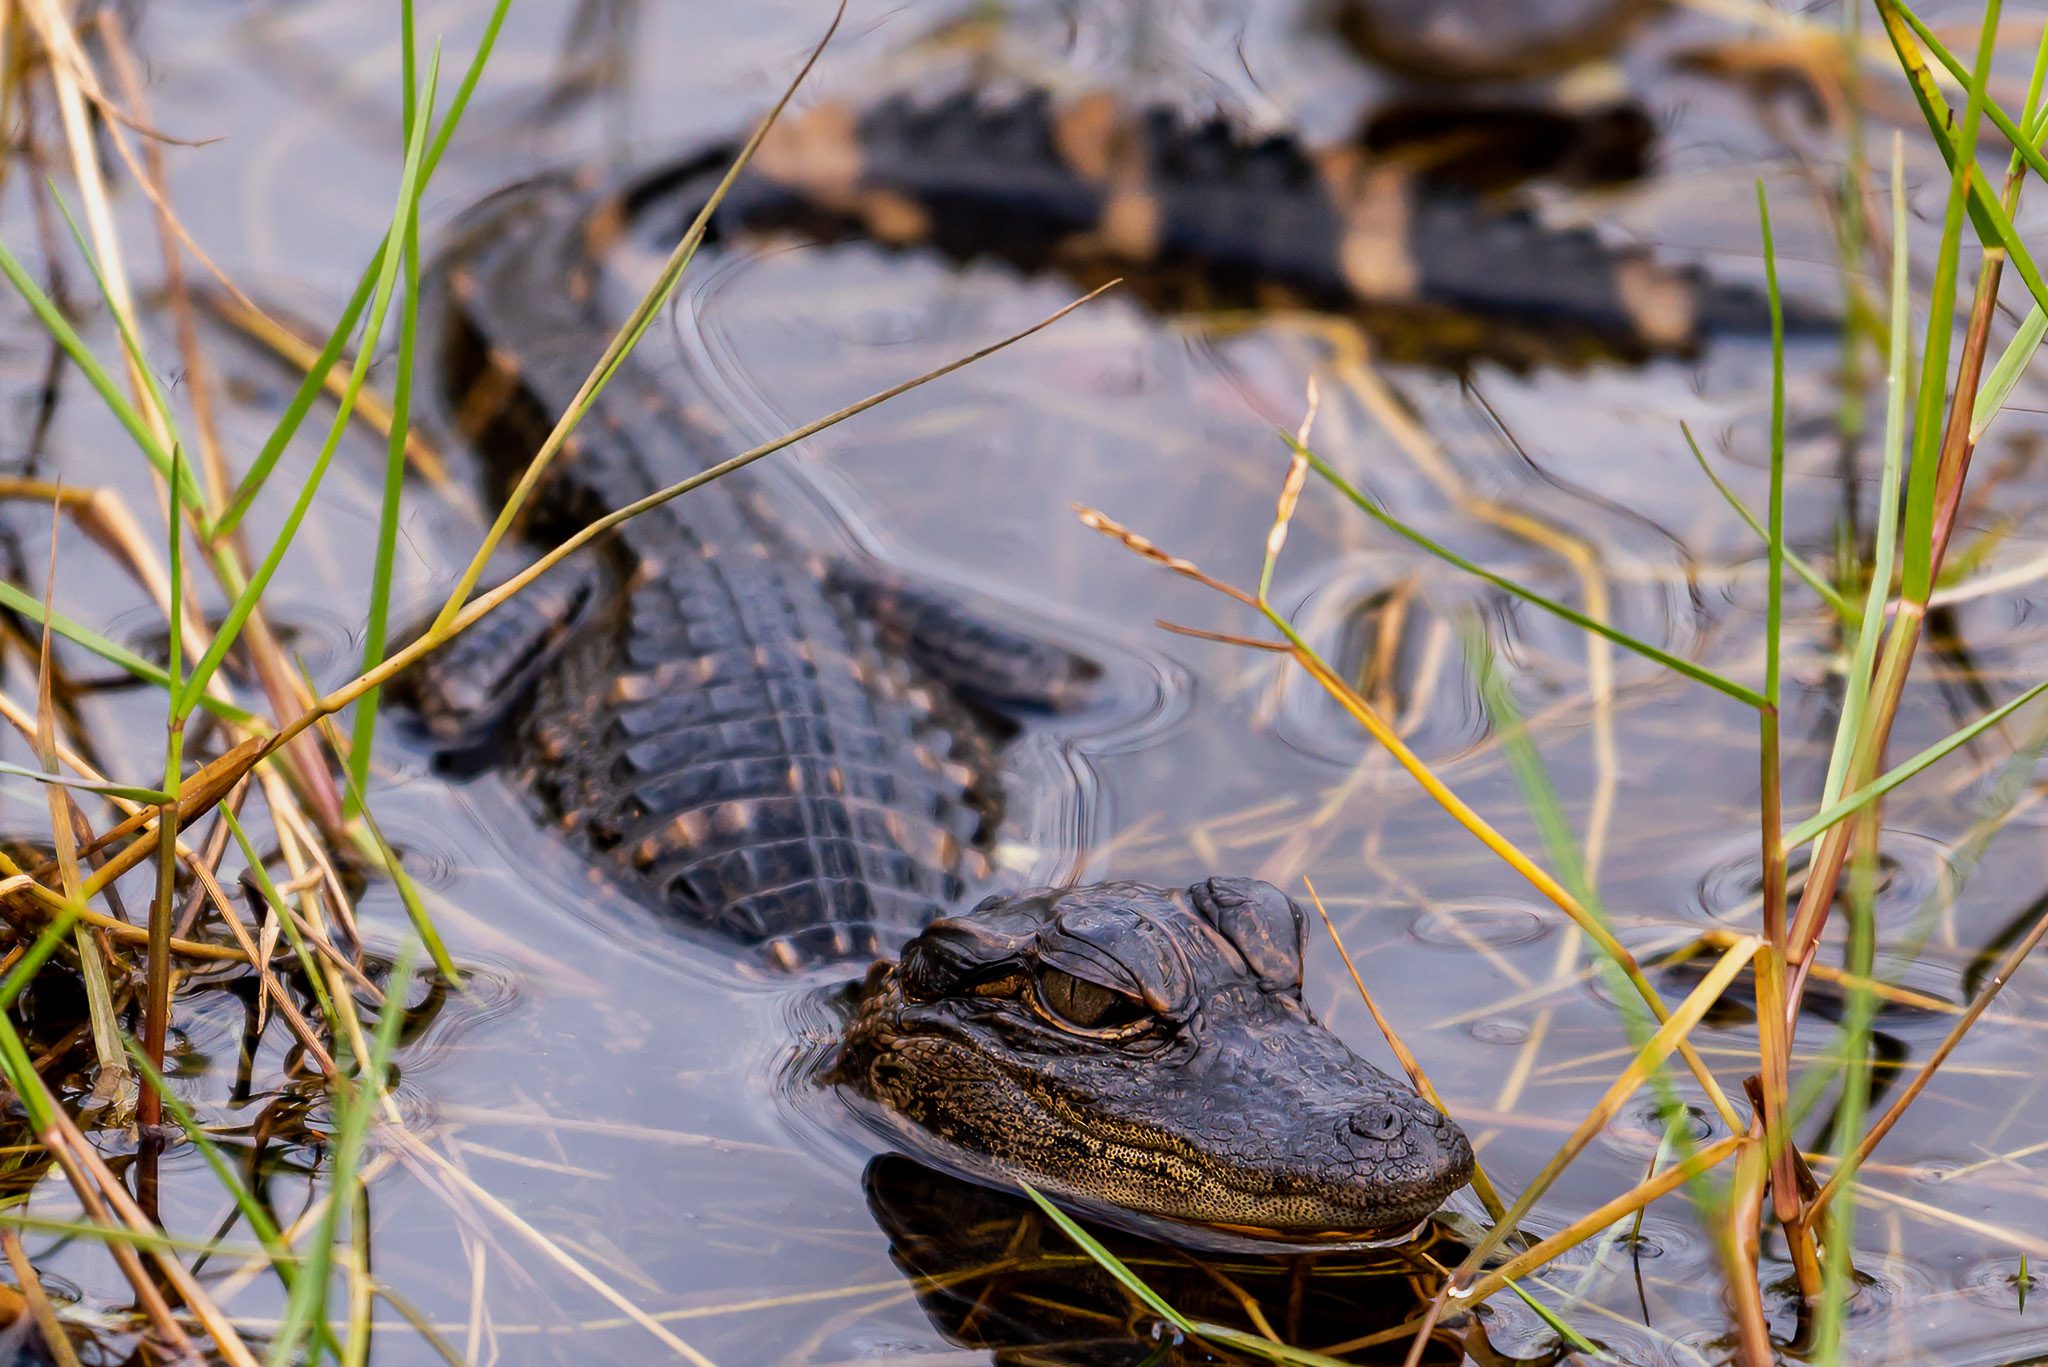 Young American alligator in Merritt Island National Wildlife Refuge, FL.